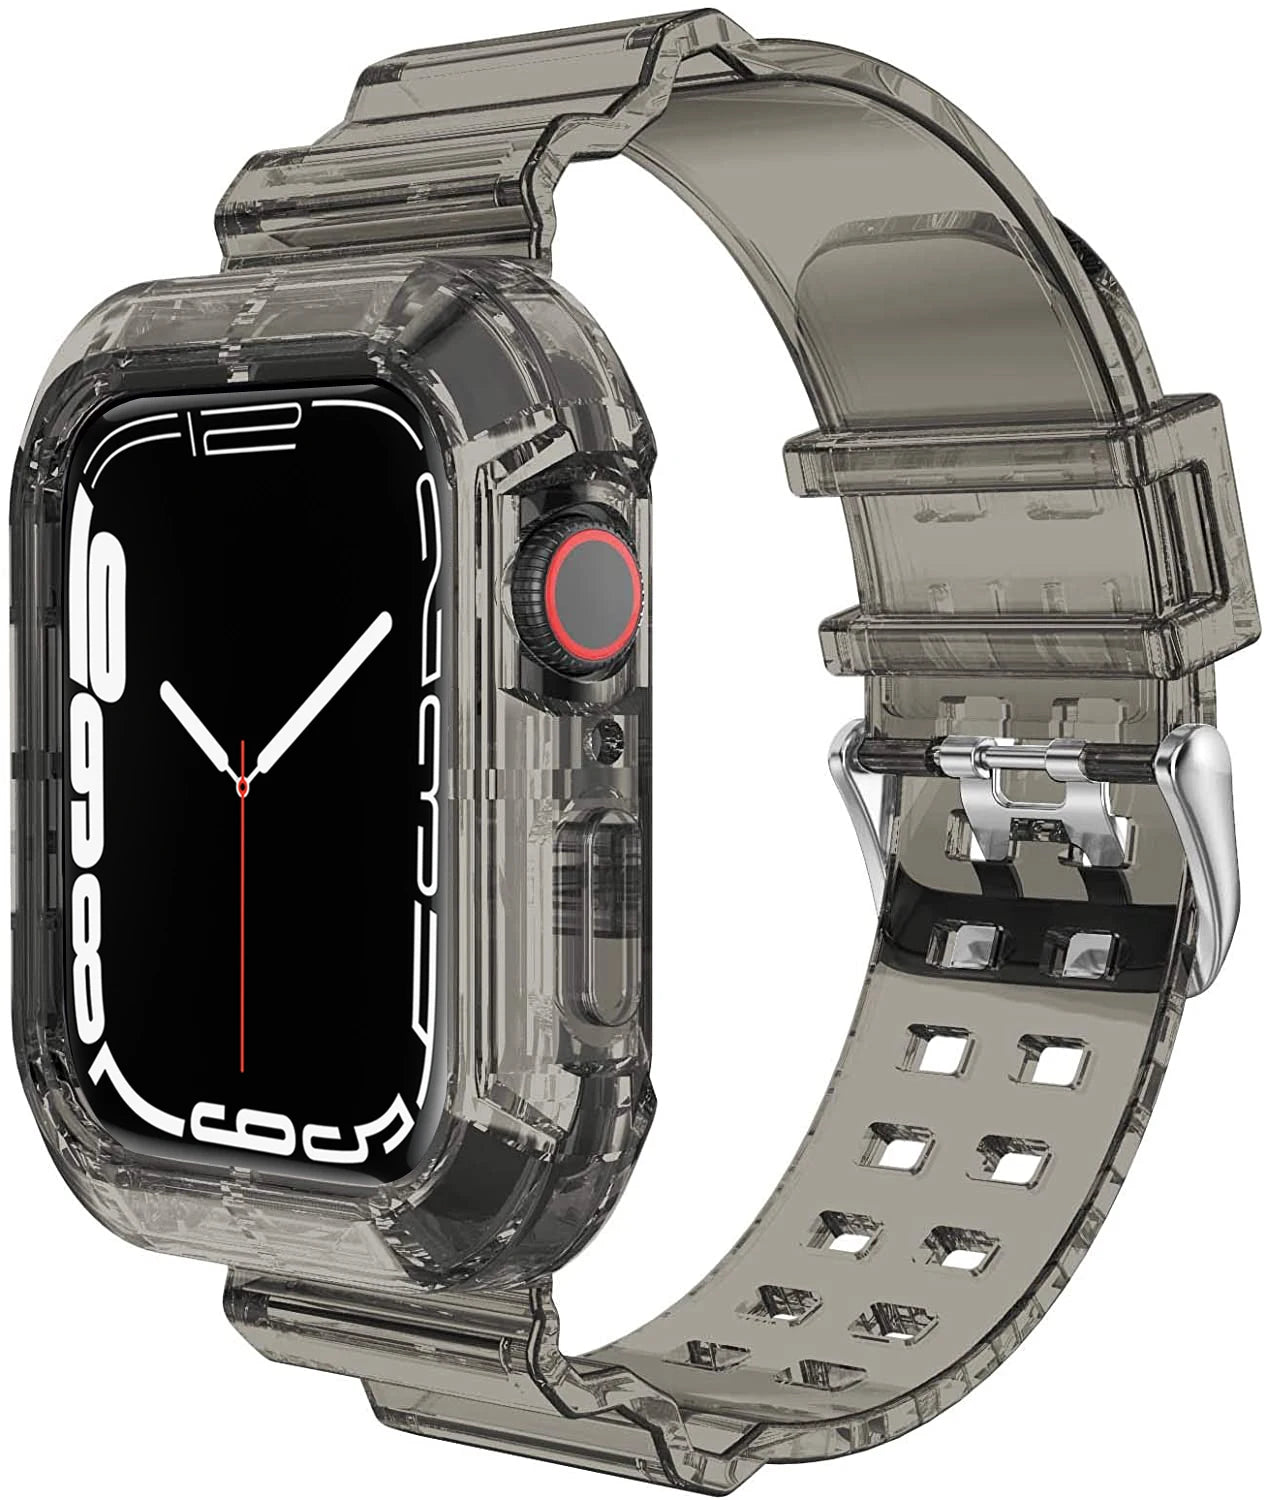 Apple Watch Case,Strap